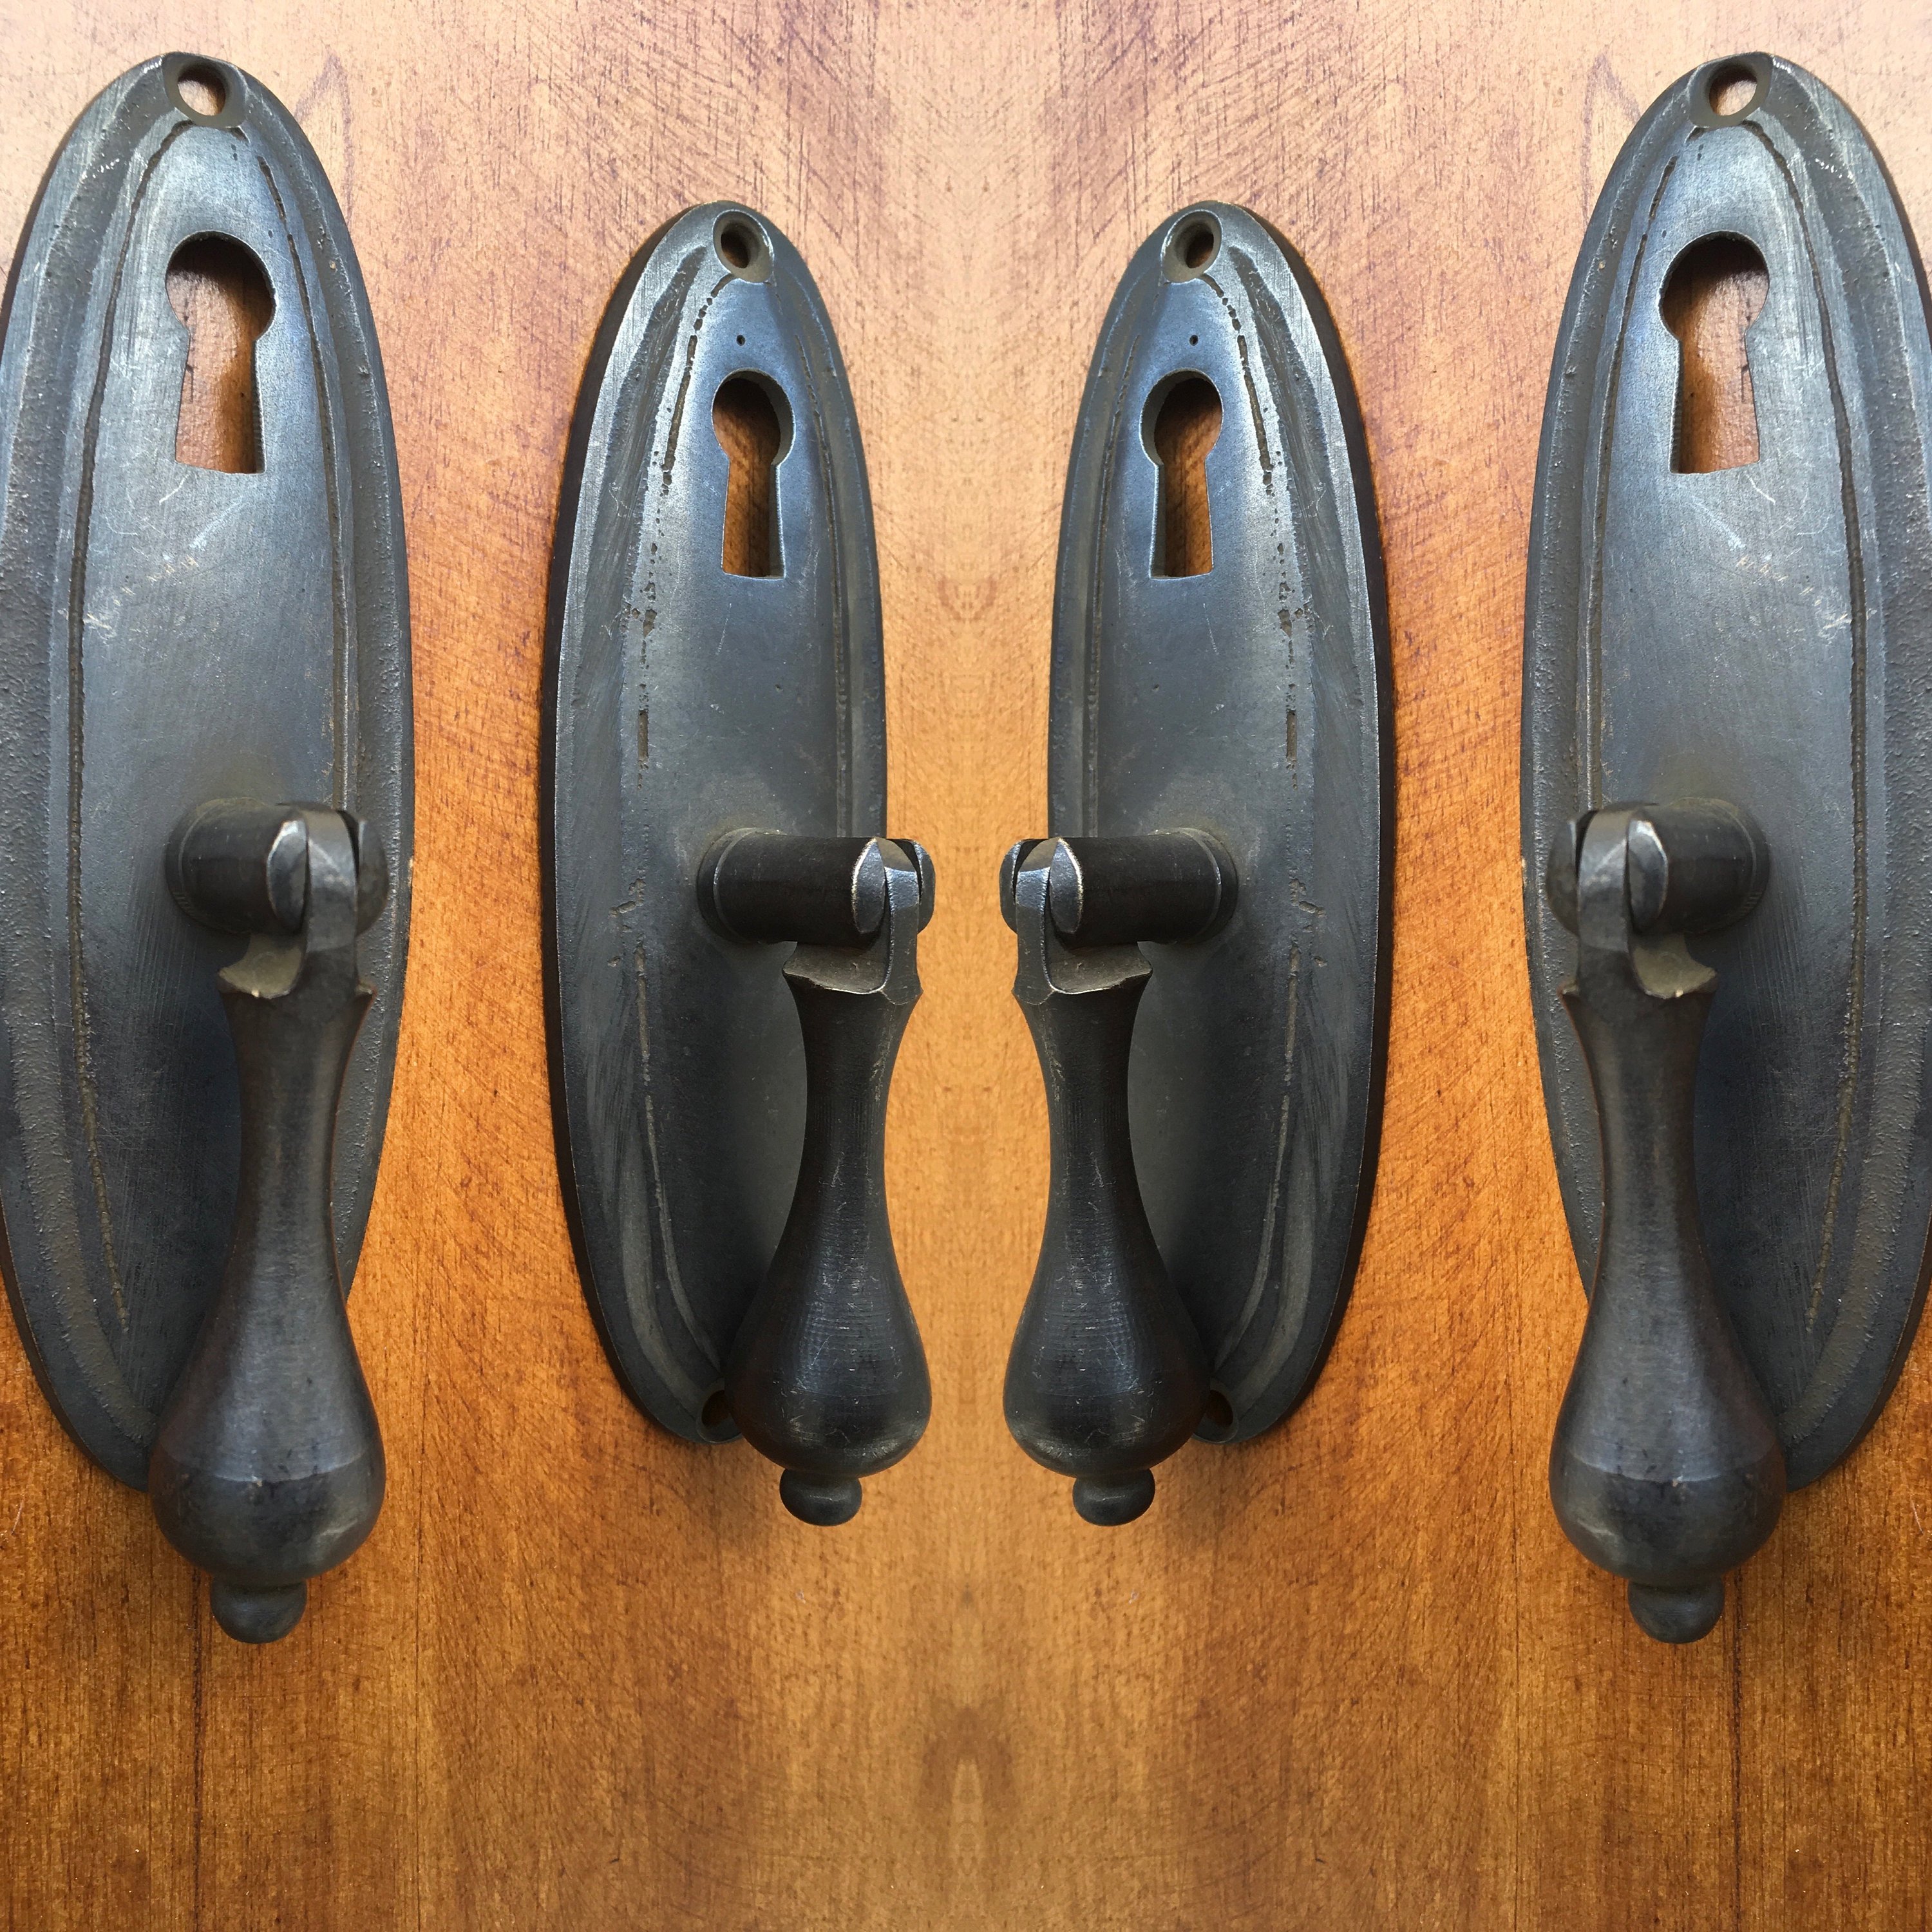 4 Oval Drop Pull Knob Pulls Handles 4 Brass Door Key Hole Vintage